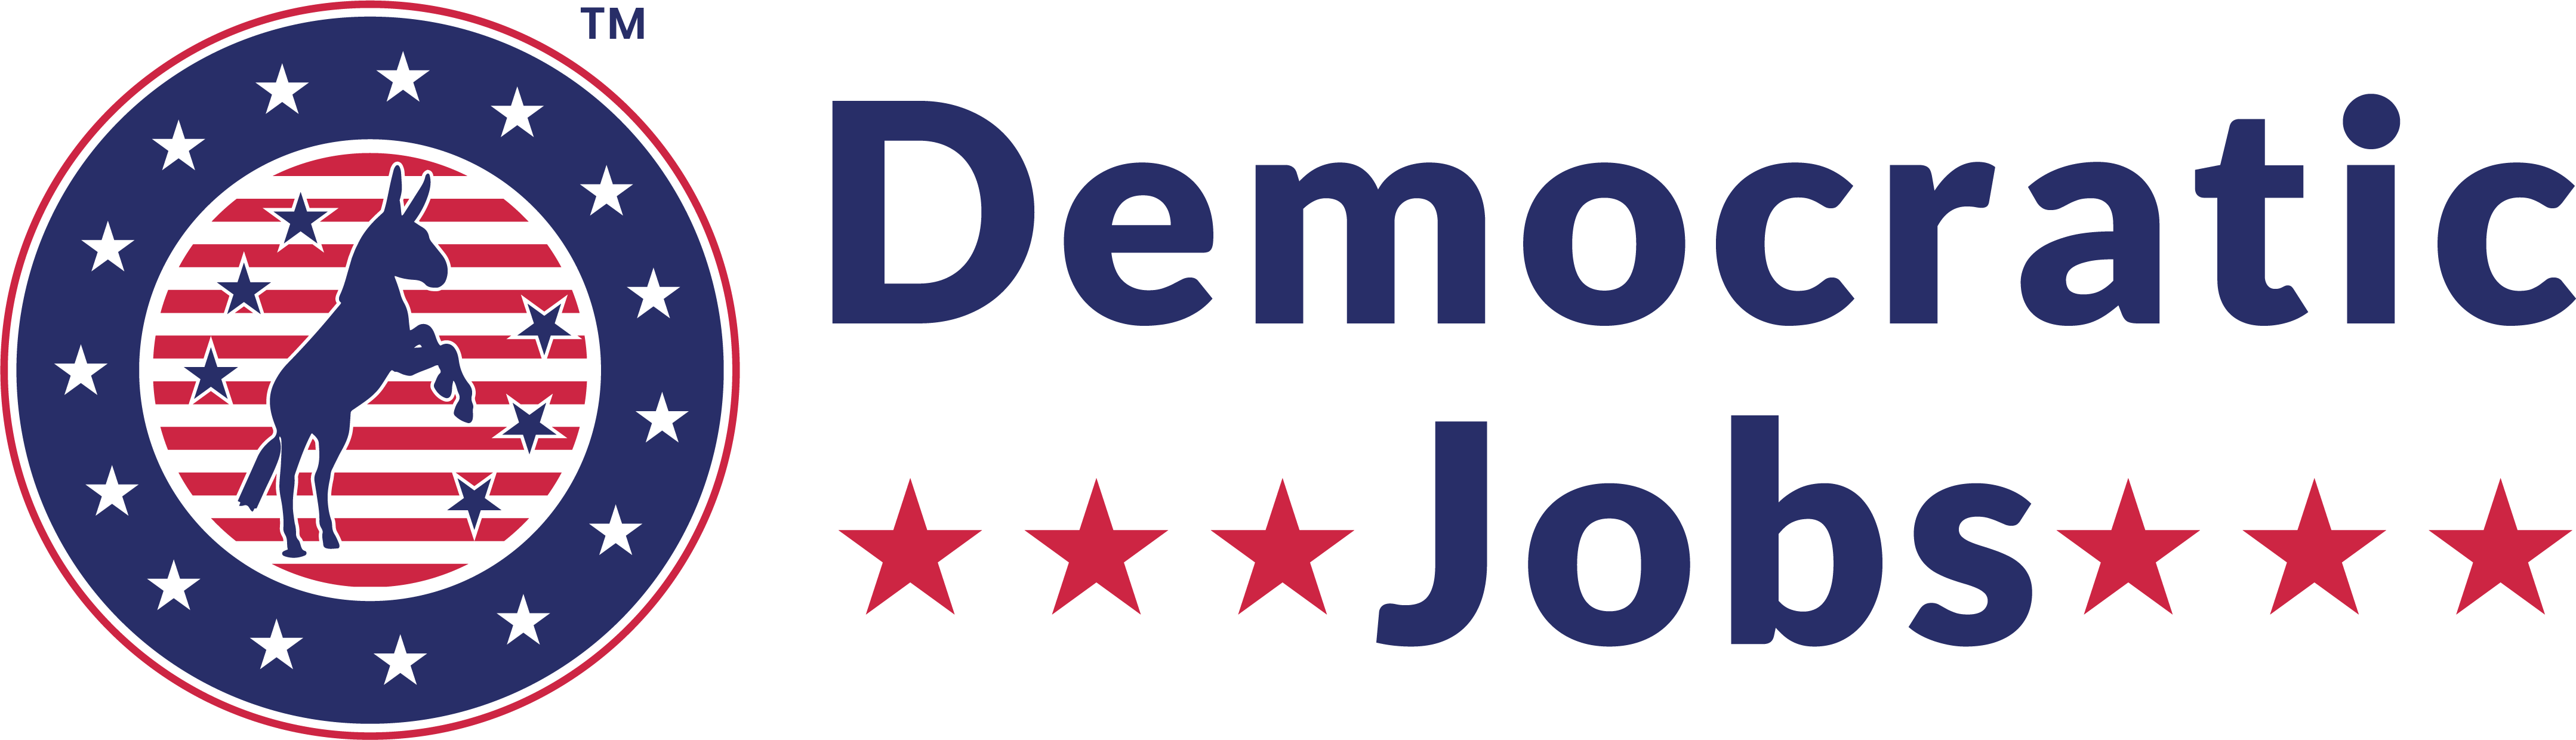 democracy club jobs